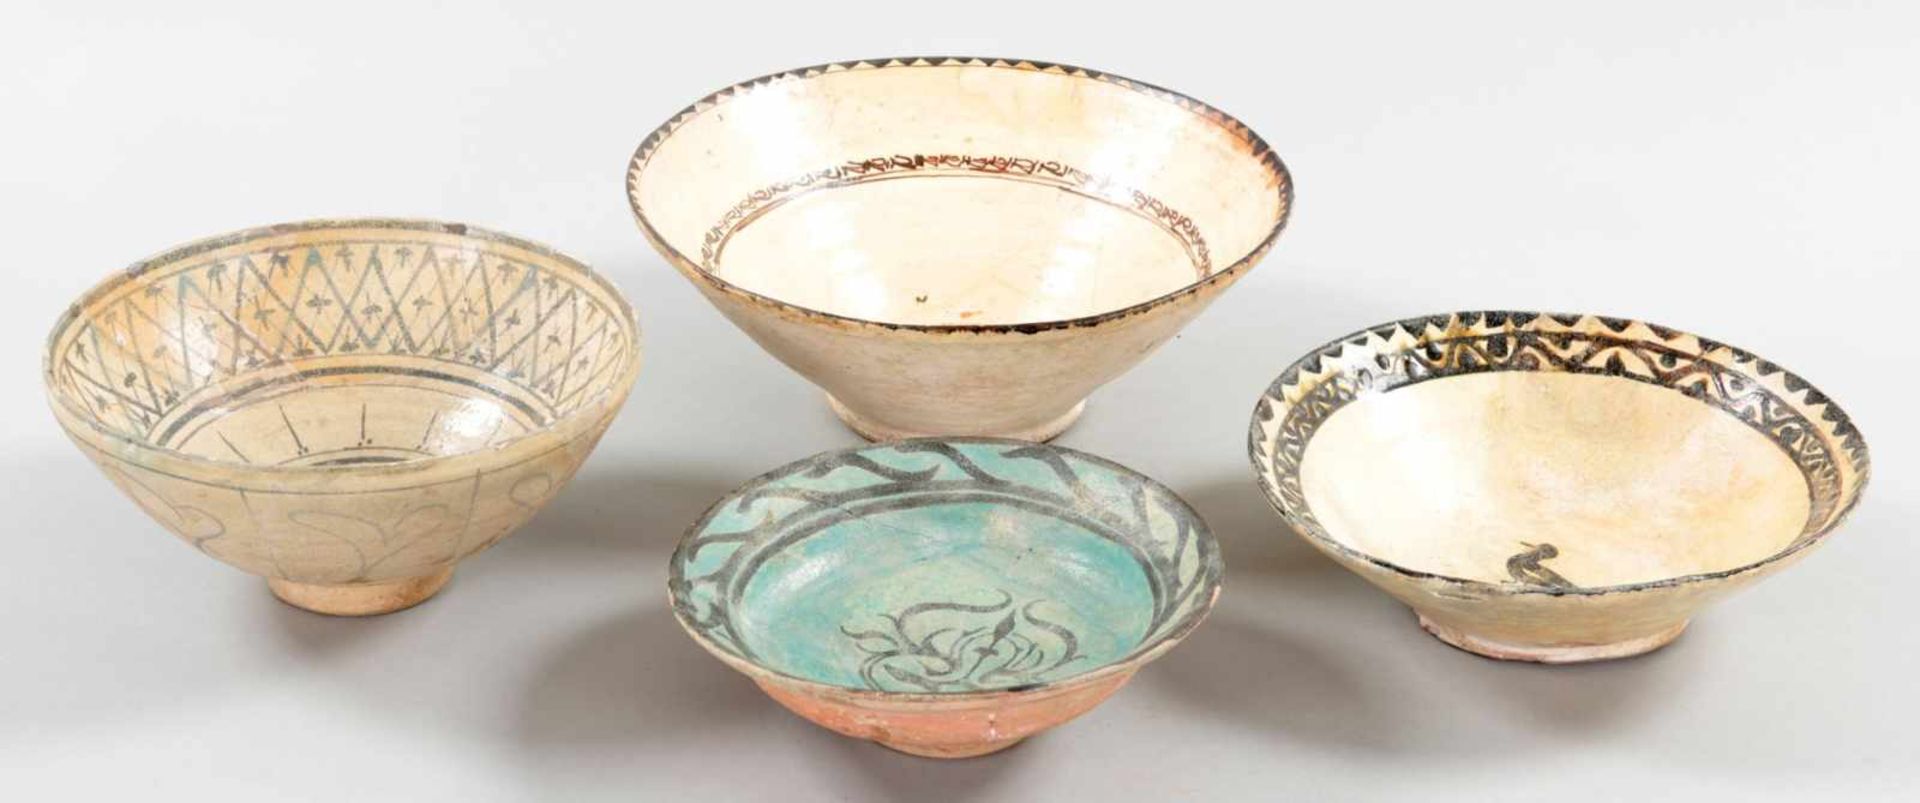 4 KummenKeramik, Persischer Raum Im Stile antiker Nishapur-Keramik m. umlaufender Ornamentik. Je